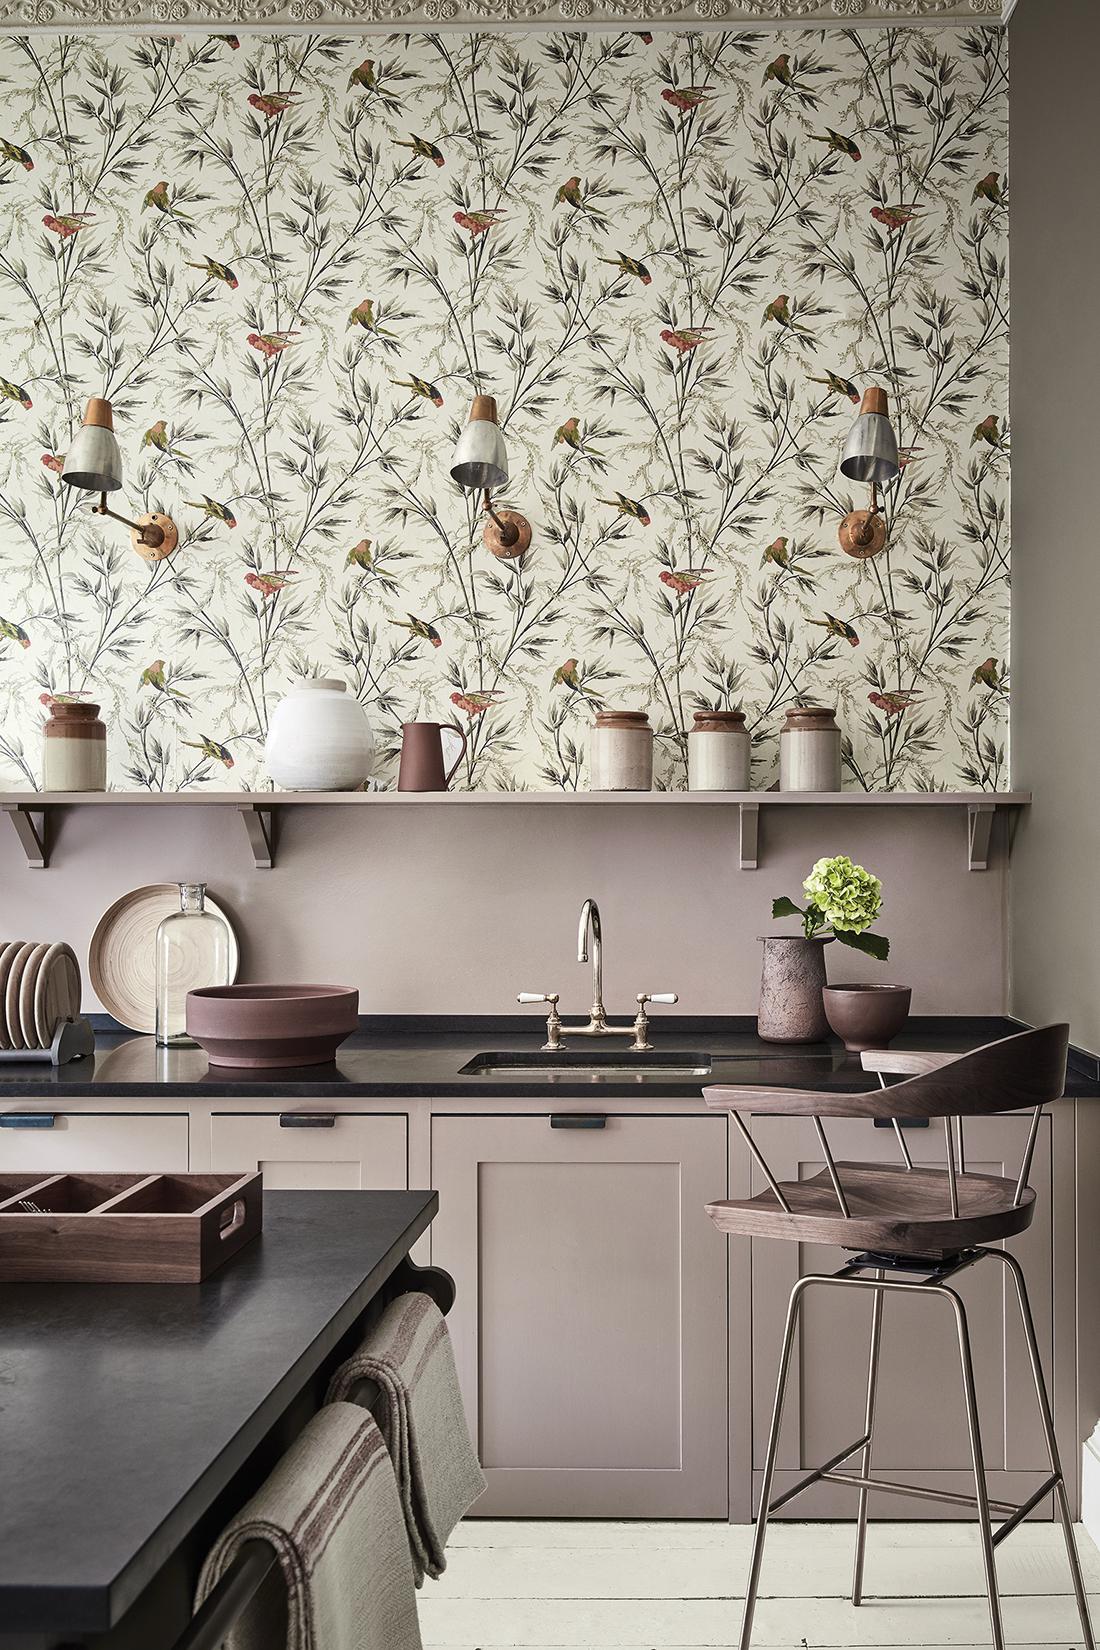 Tapete "Great ormond St." in der Küche #küche #mustertapete #blumentapete ©Little Greene